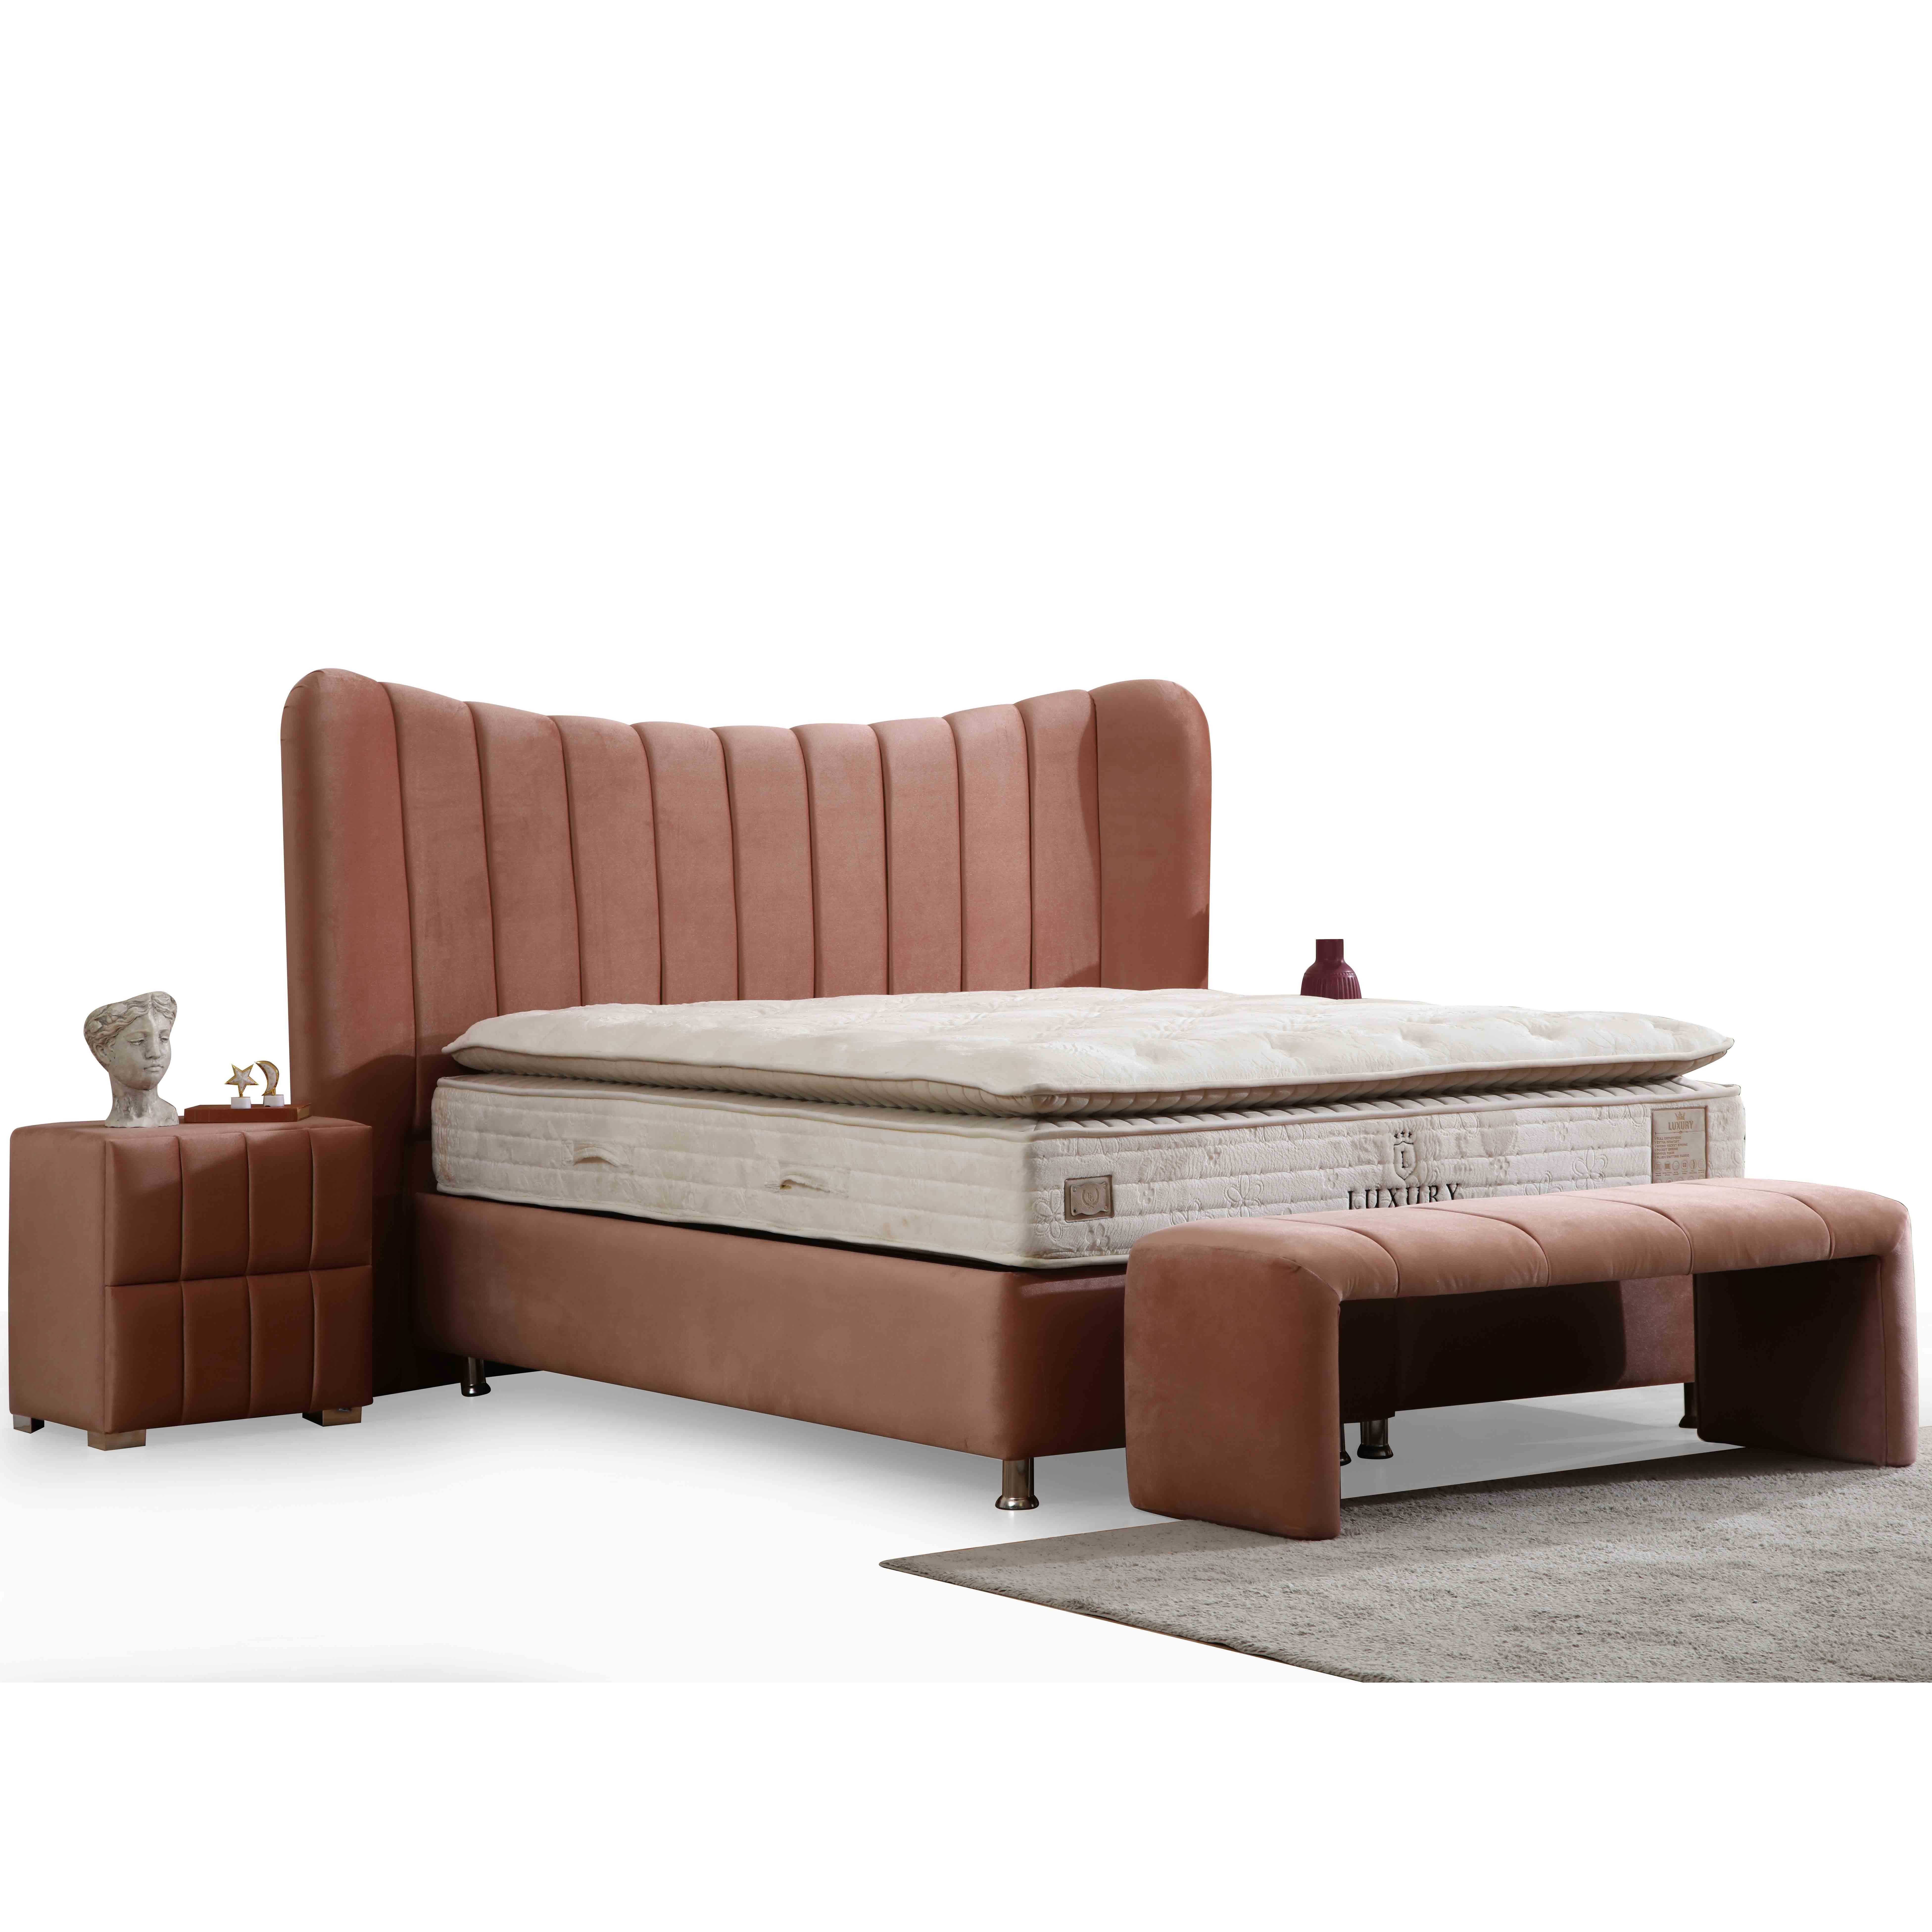 Rodos Bed With Storage 160x200 cm